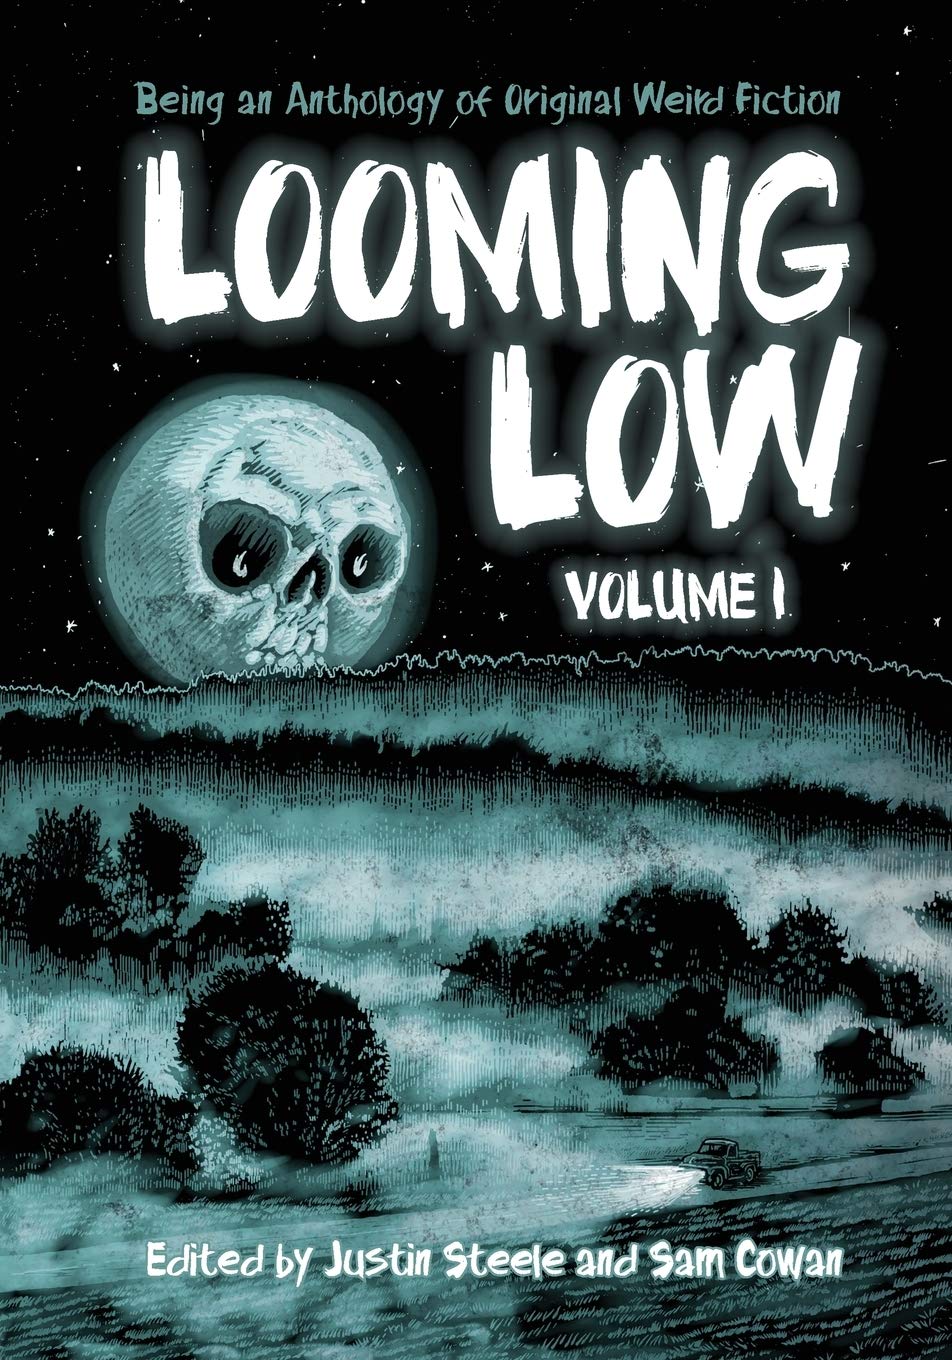 Looming Low Vol I by Sam Cowan